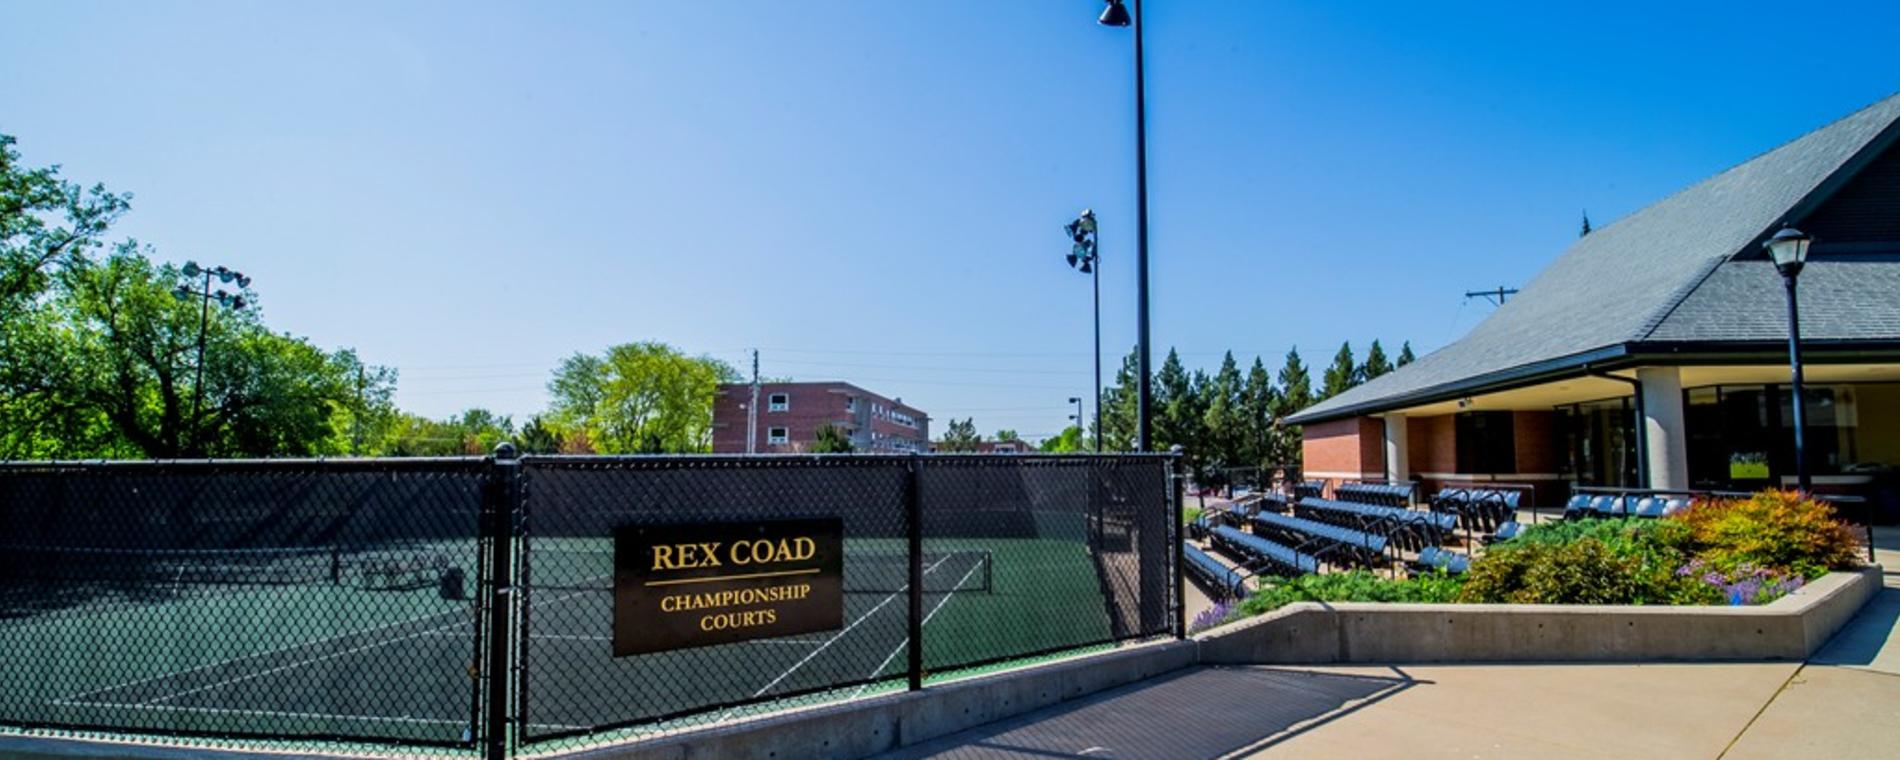 Sheldon Coleman Tennis Court Gate